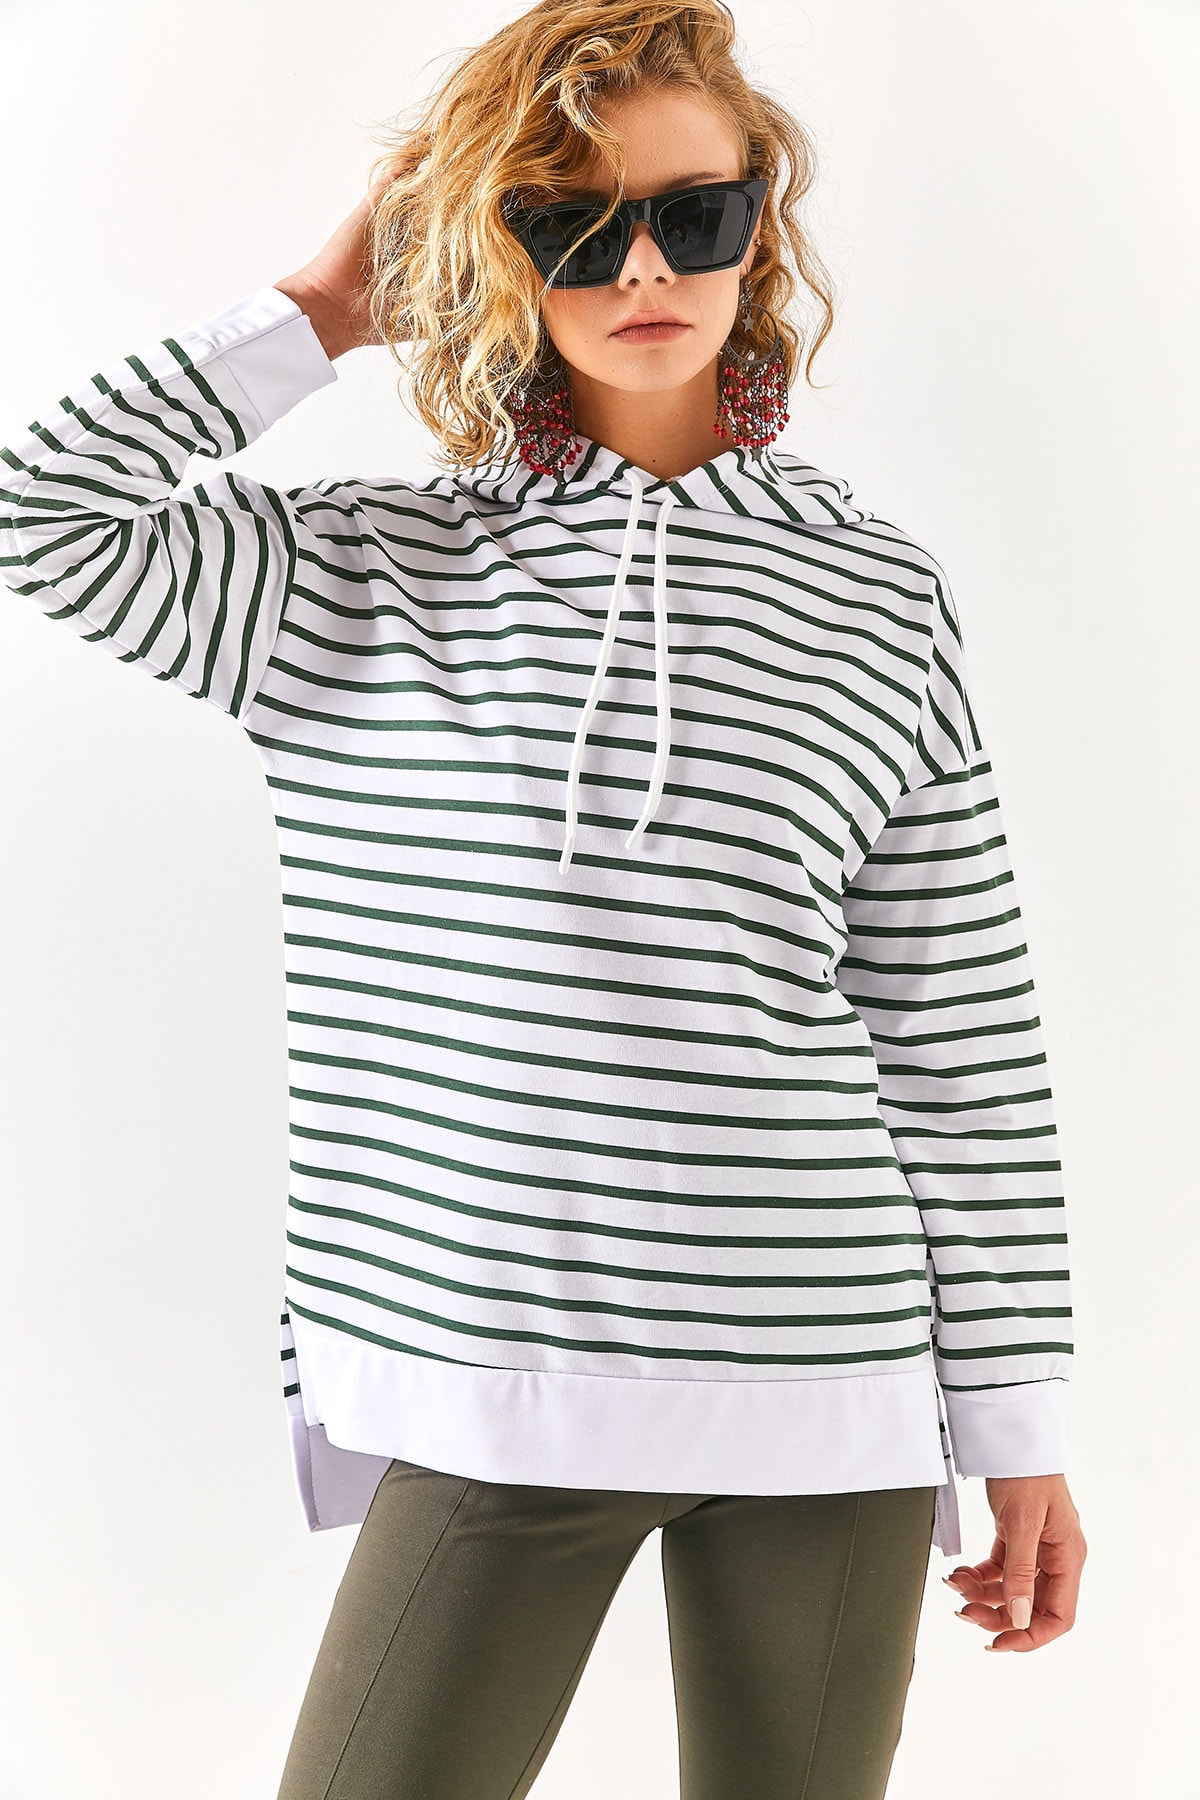 Olalook Women's Khaki White Hooded Striped Sweatshirt with Side Slits